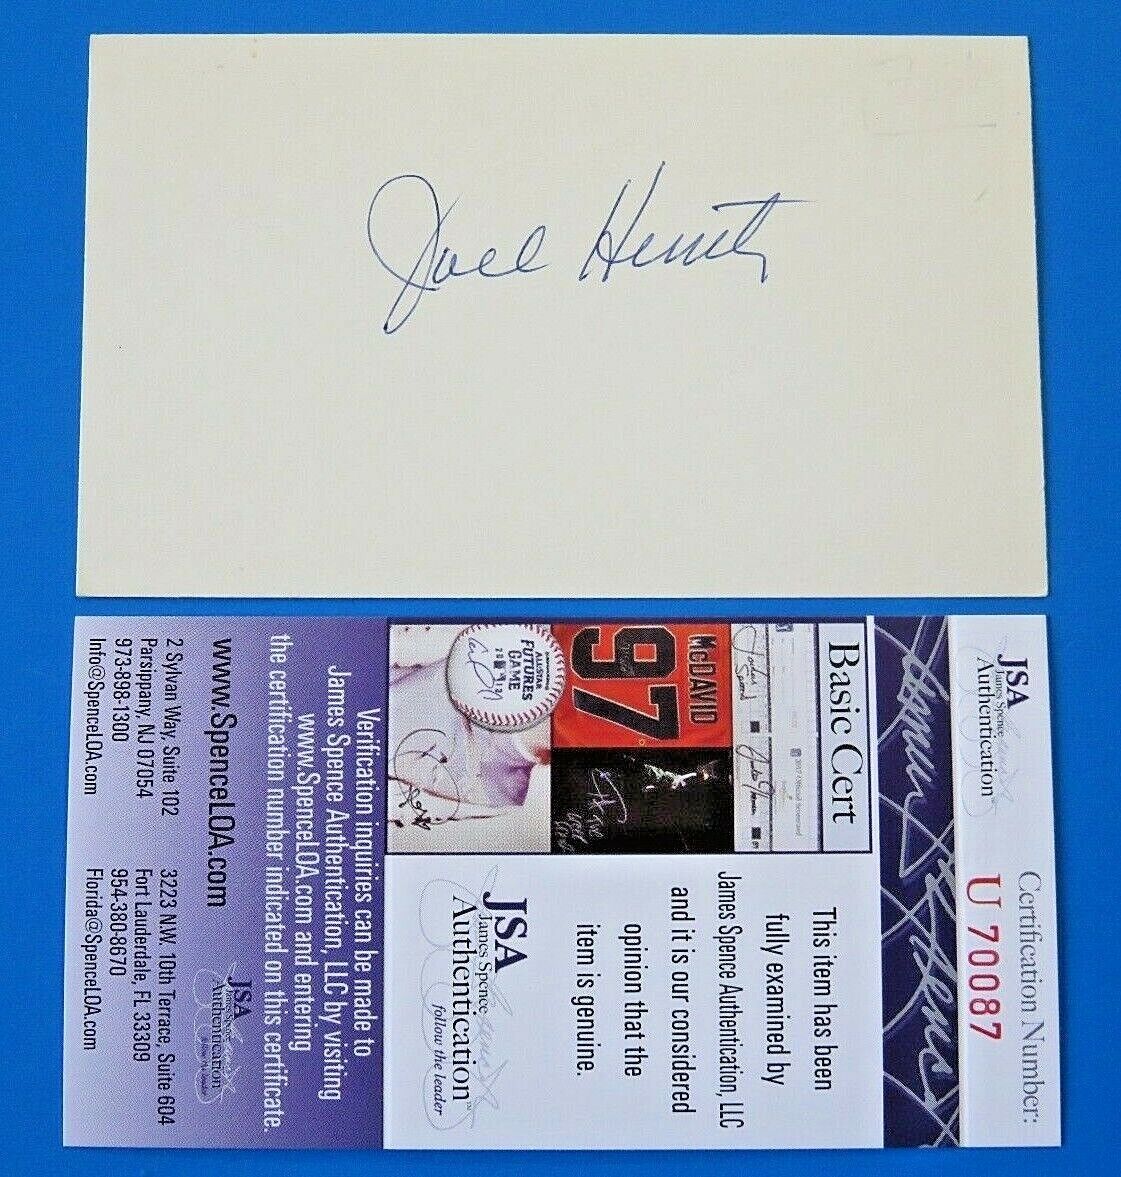 JOEL HUNT SIGNED 3x5 INDEX CARD ~ FOOTBALL HOF & BASEBALL PLAYER ~ JSA U70087